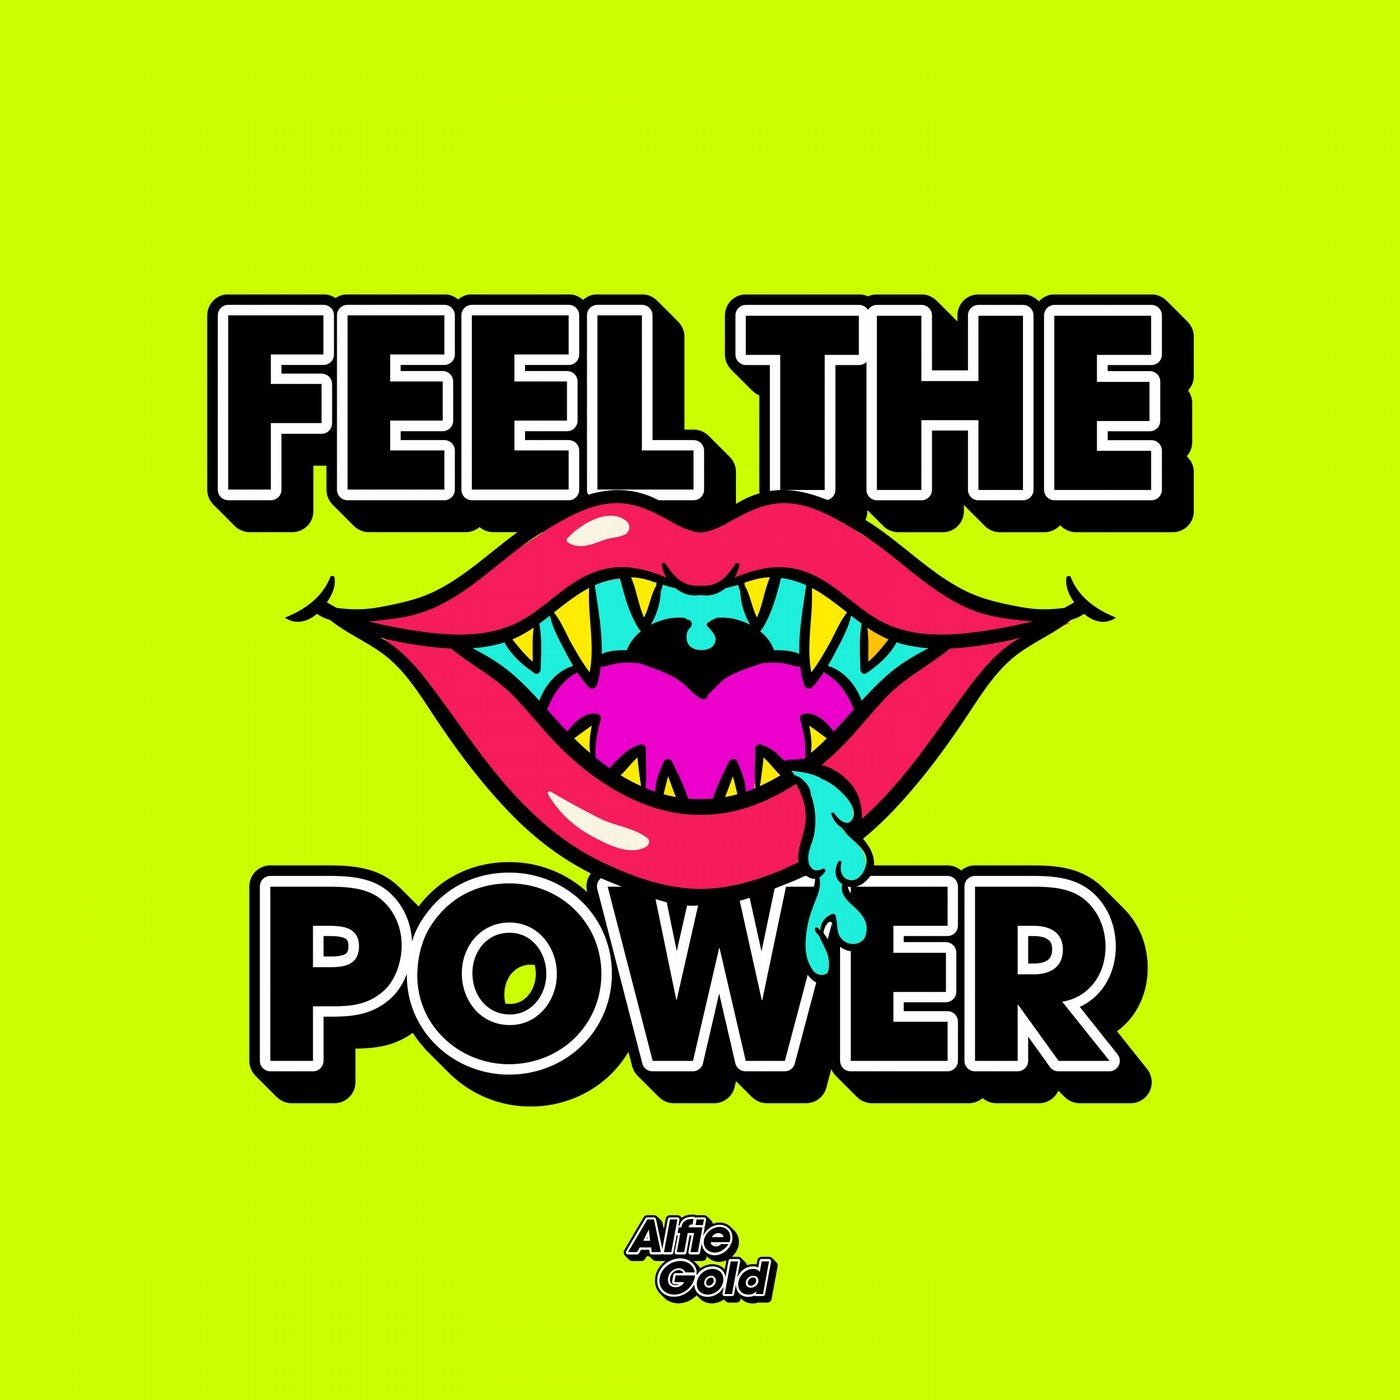 Feel The Power